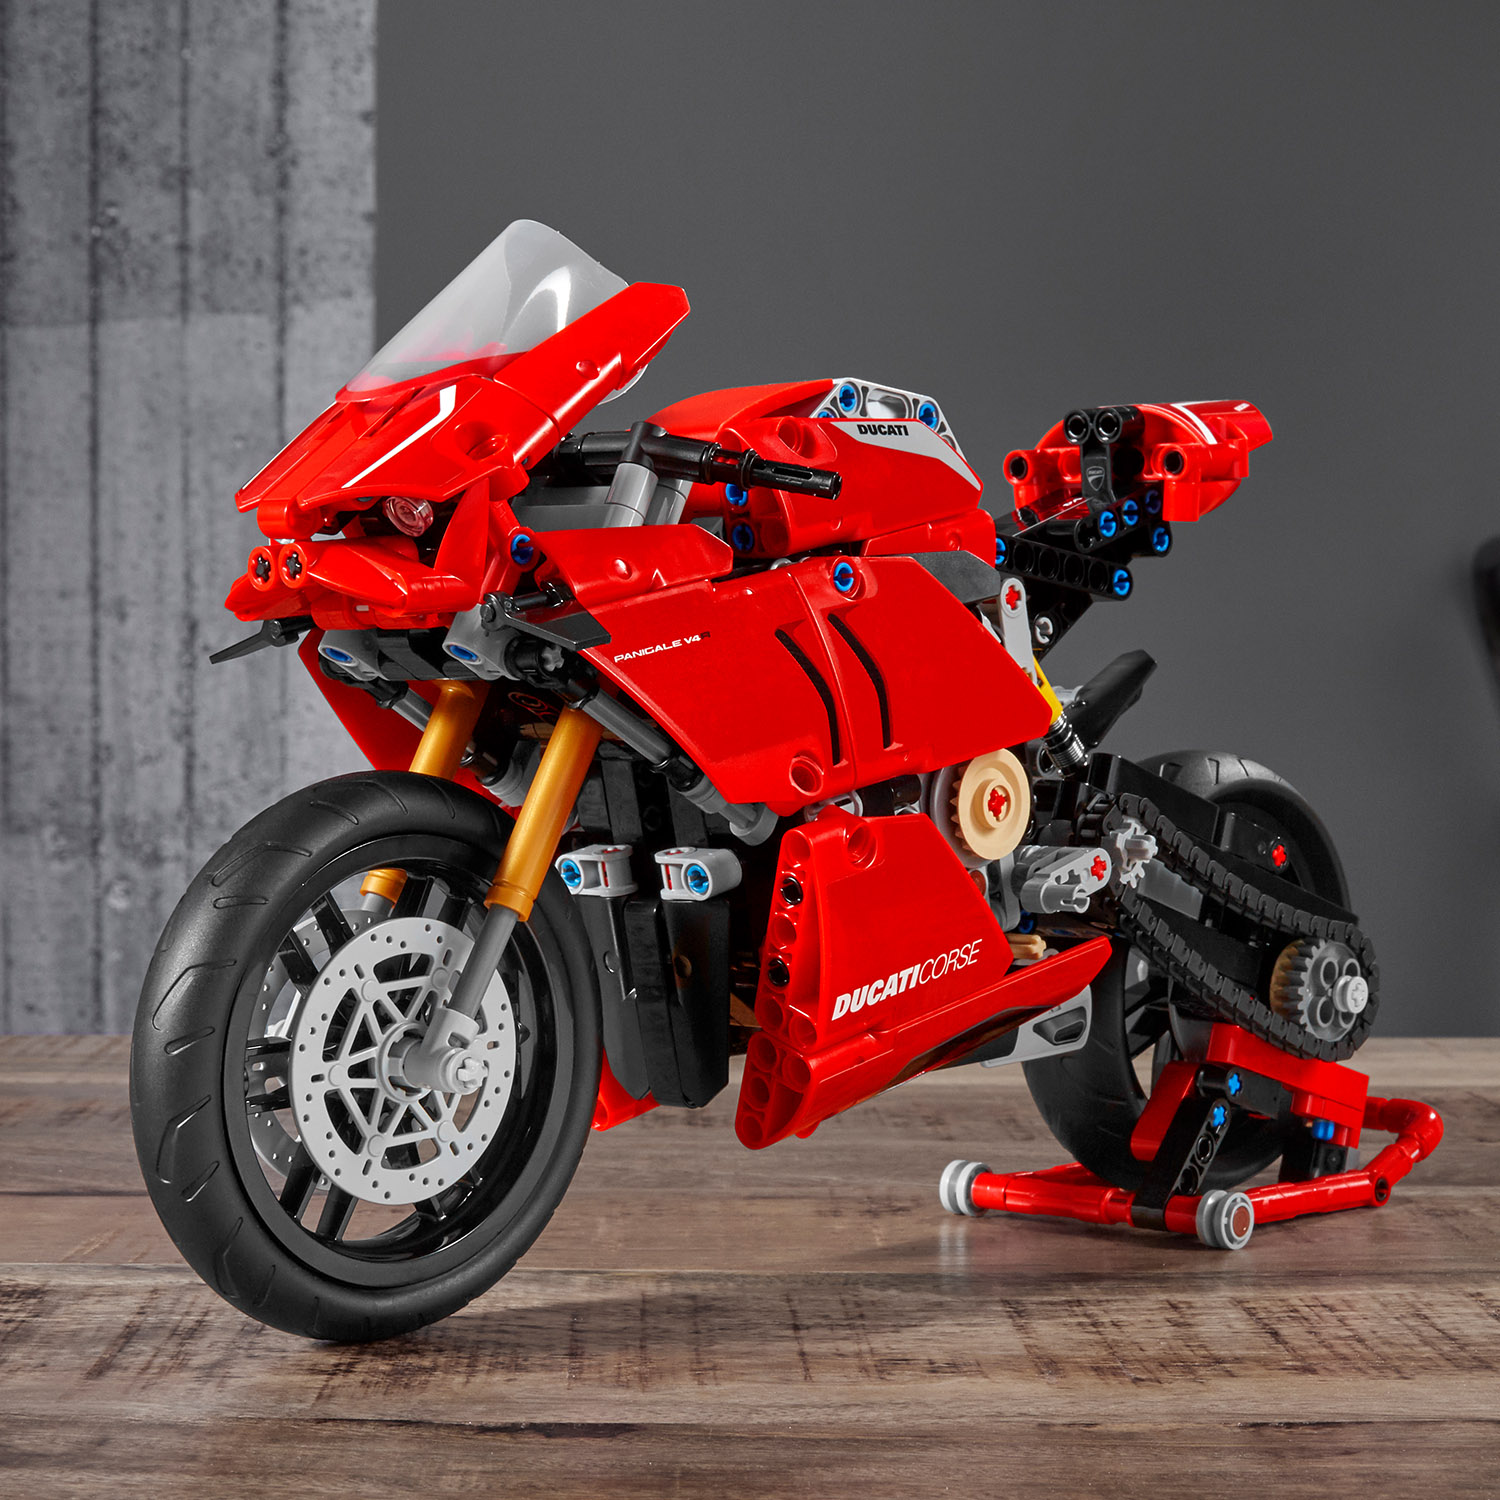 Ducati racing stand to display